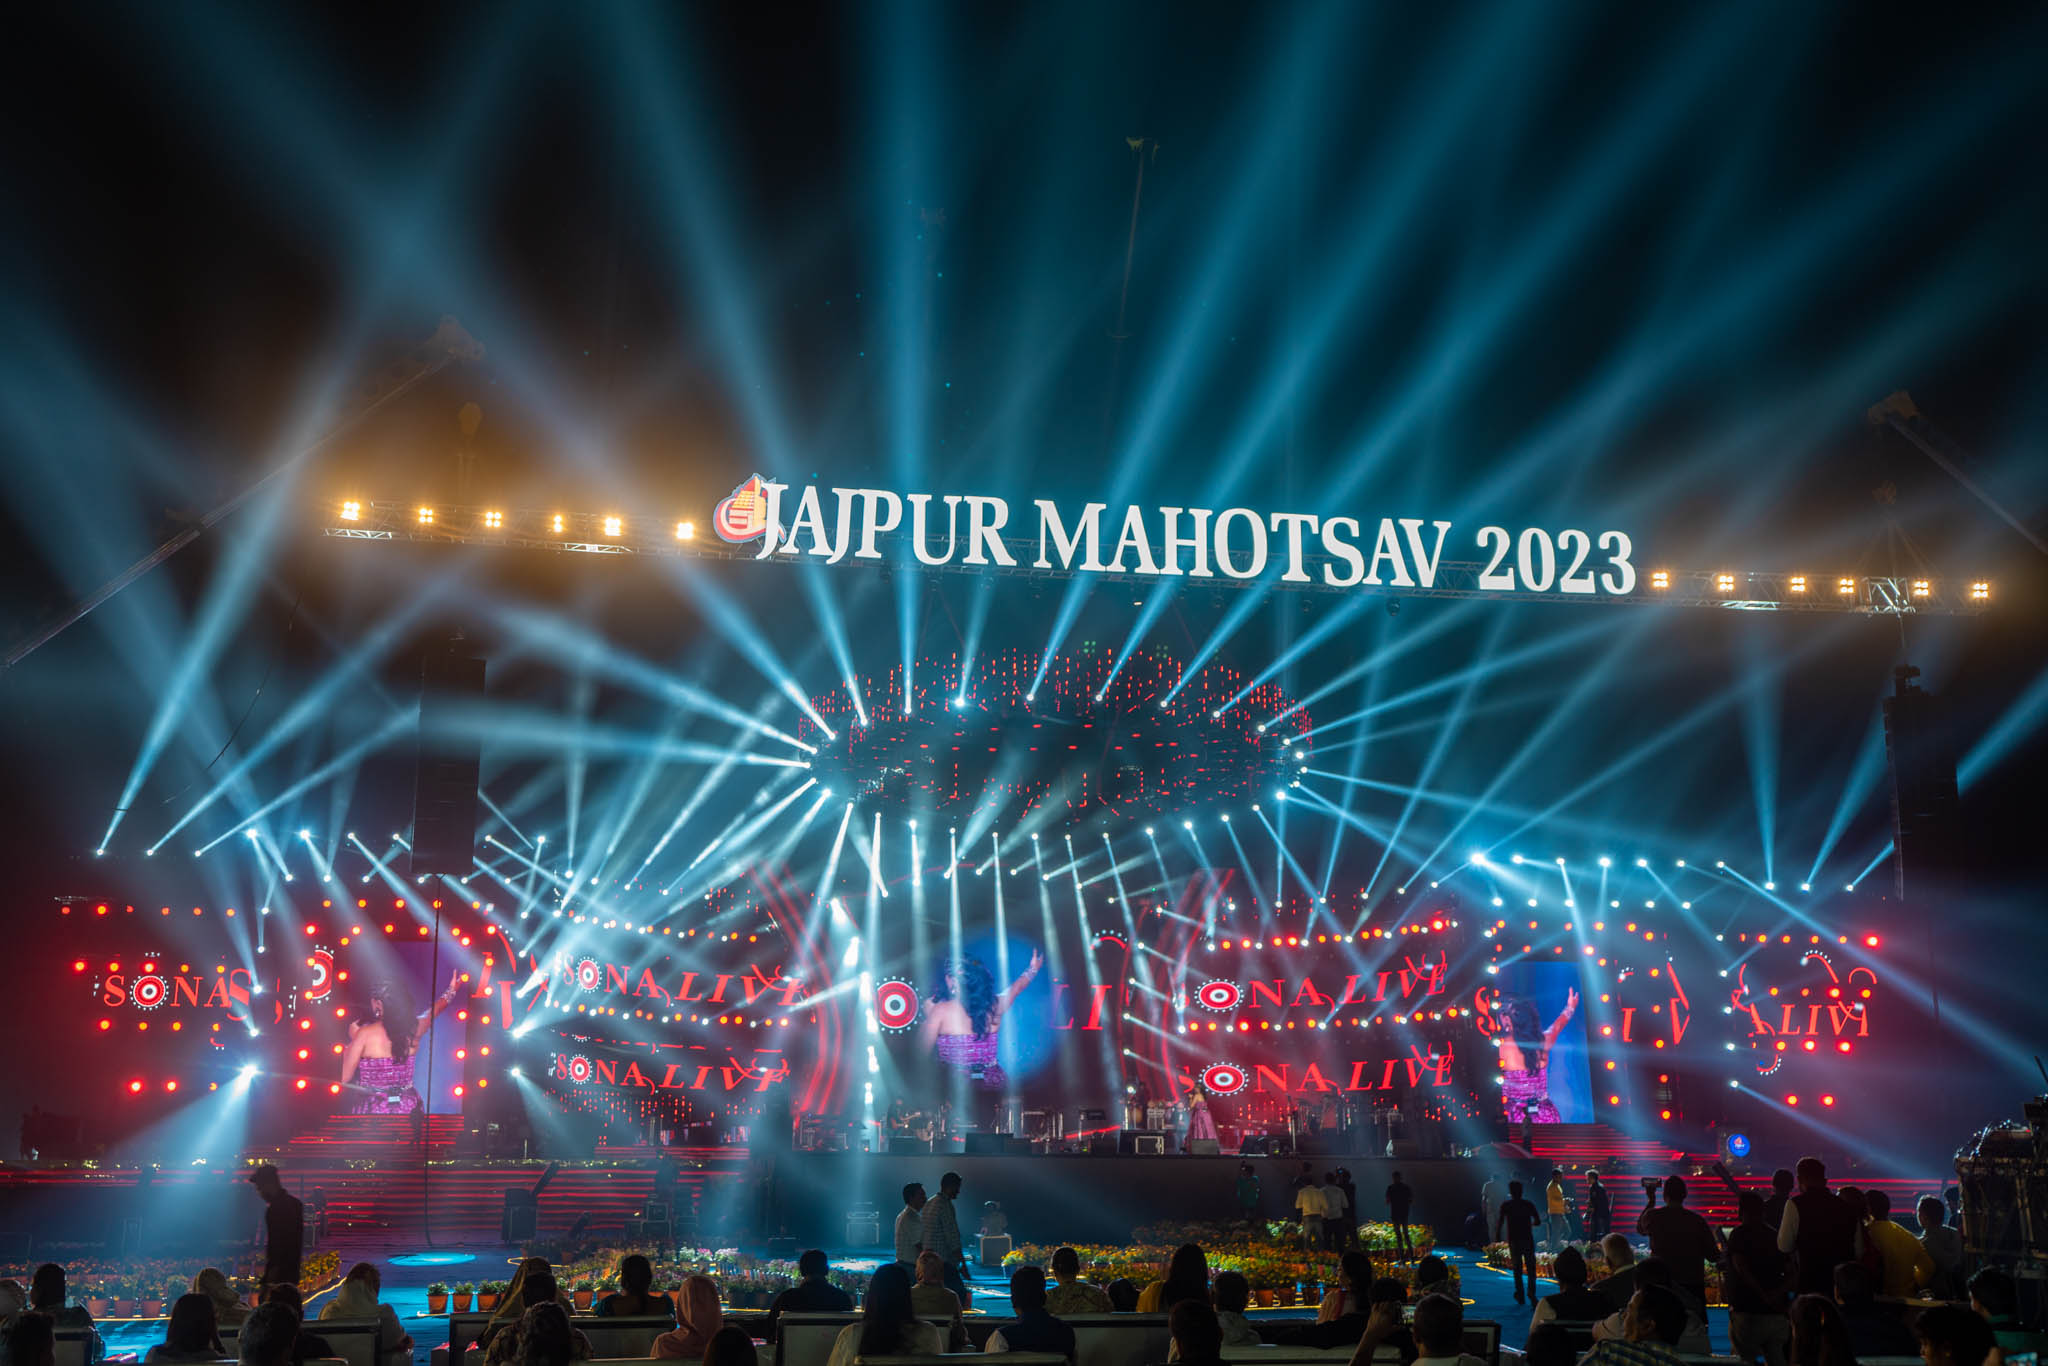 jajpur mahotsav 2023 celebrity list